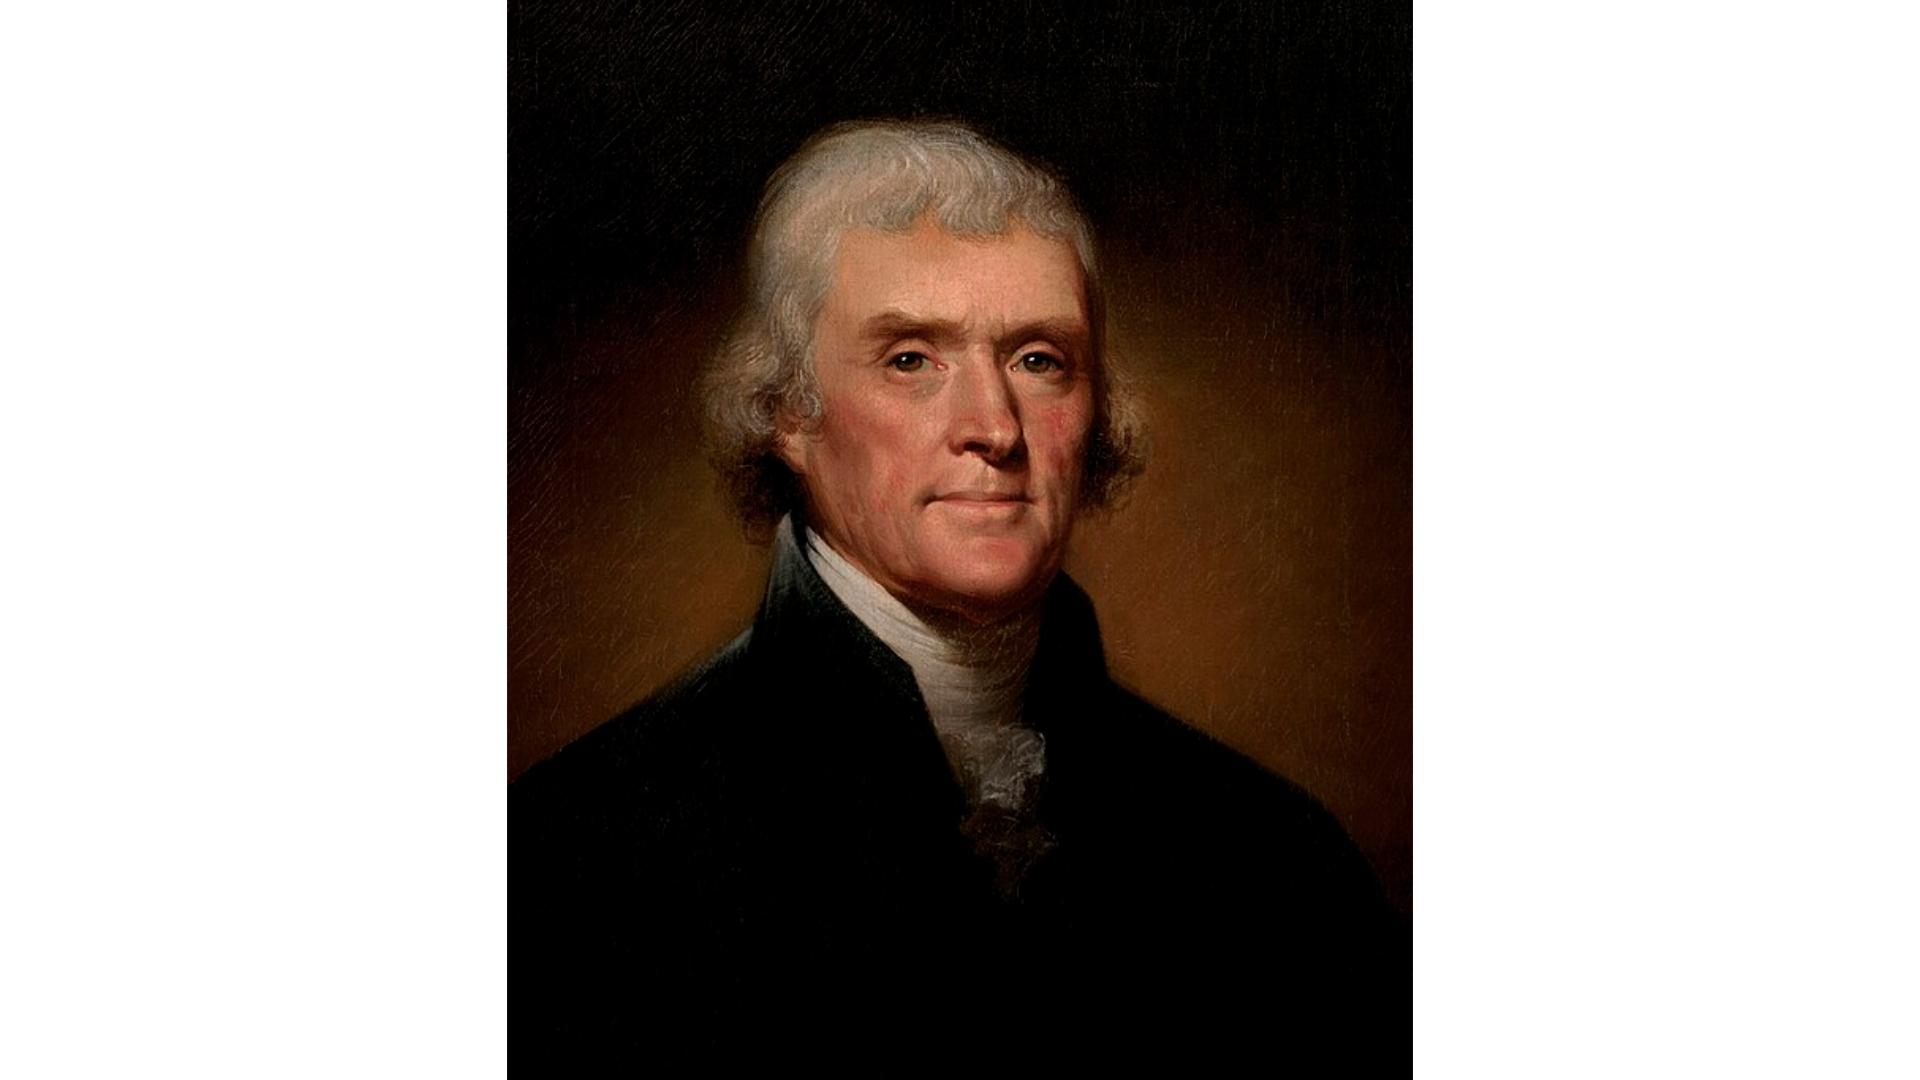 A portrait of President Thomas Jefferson